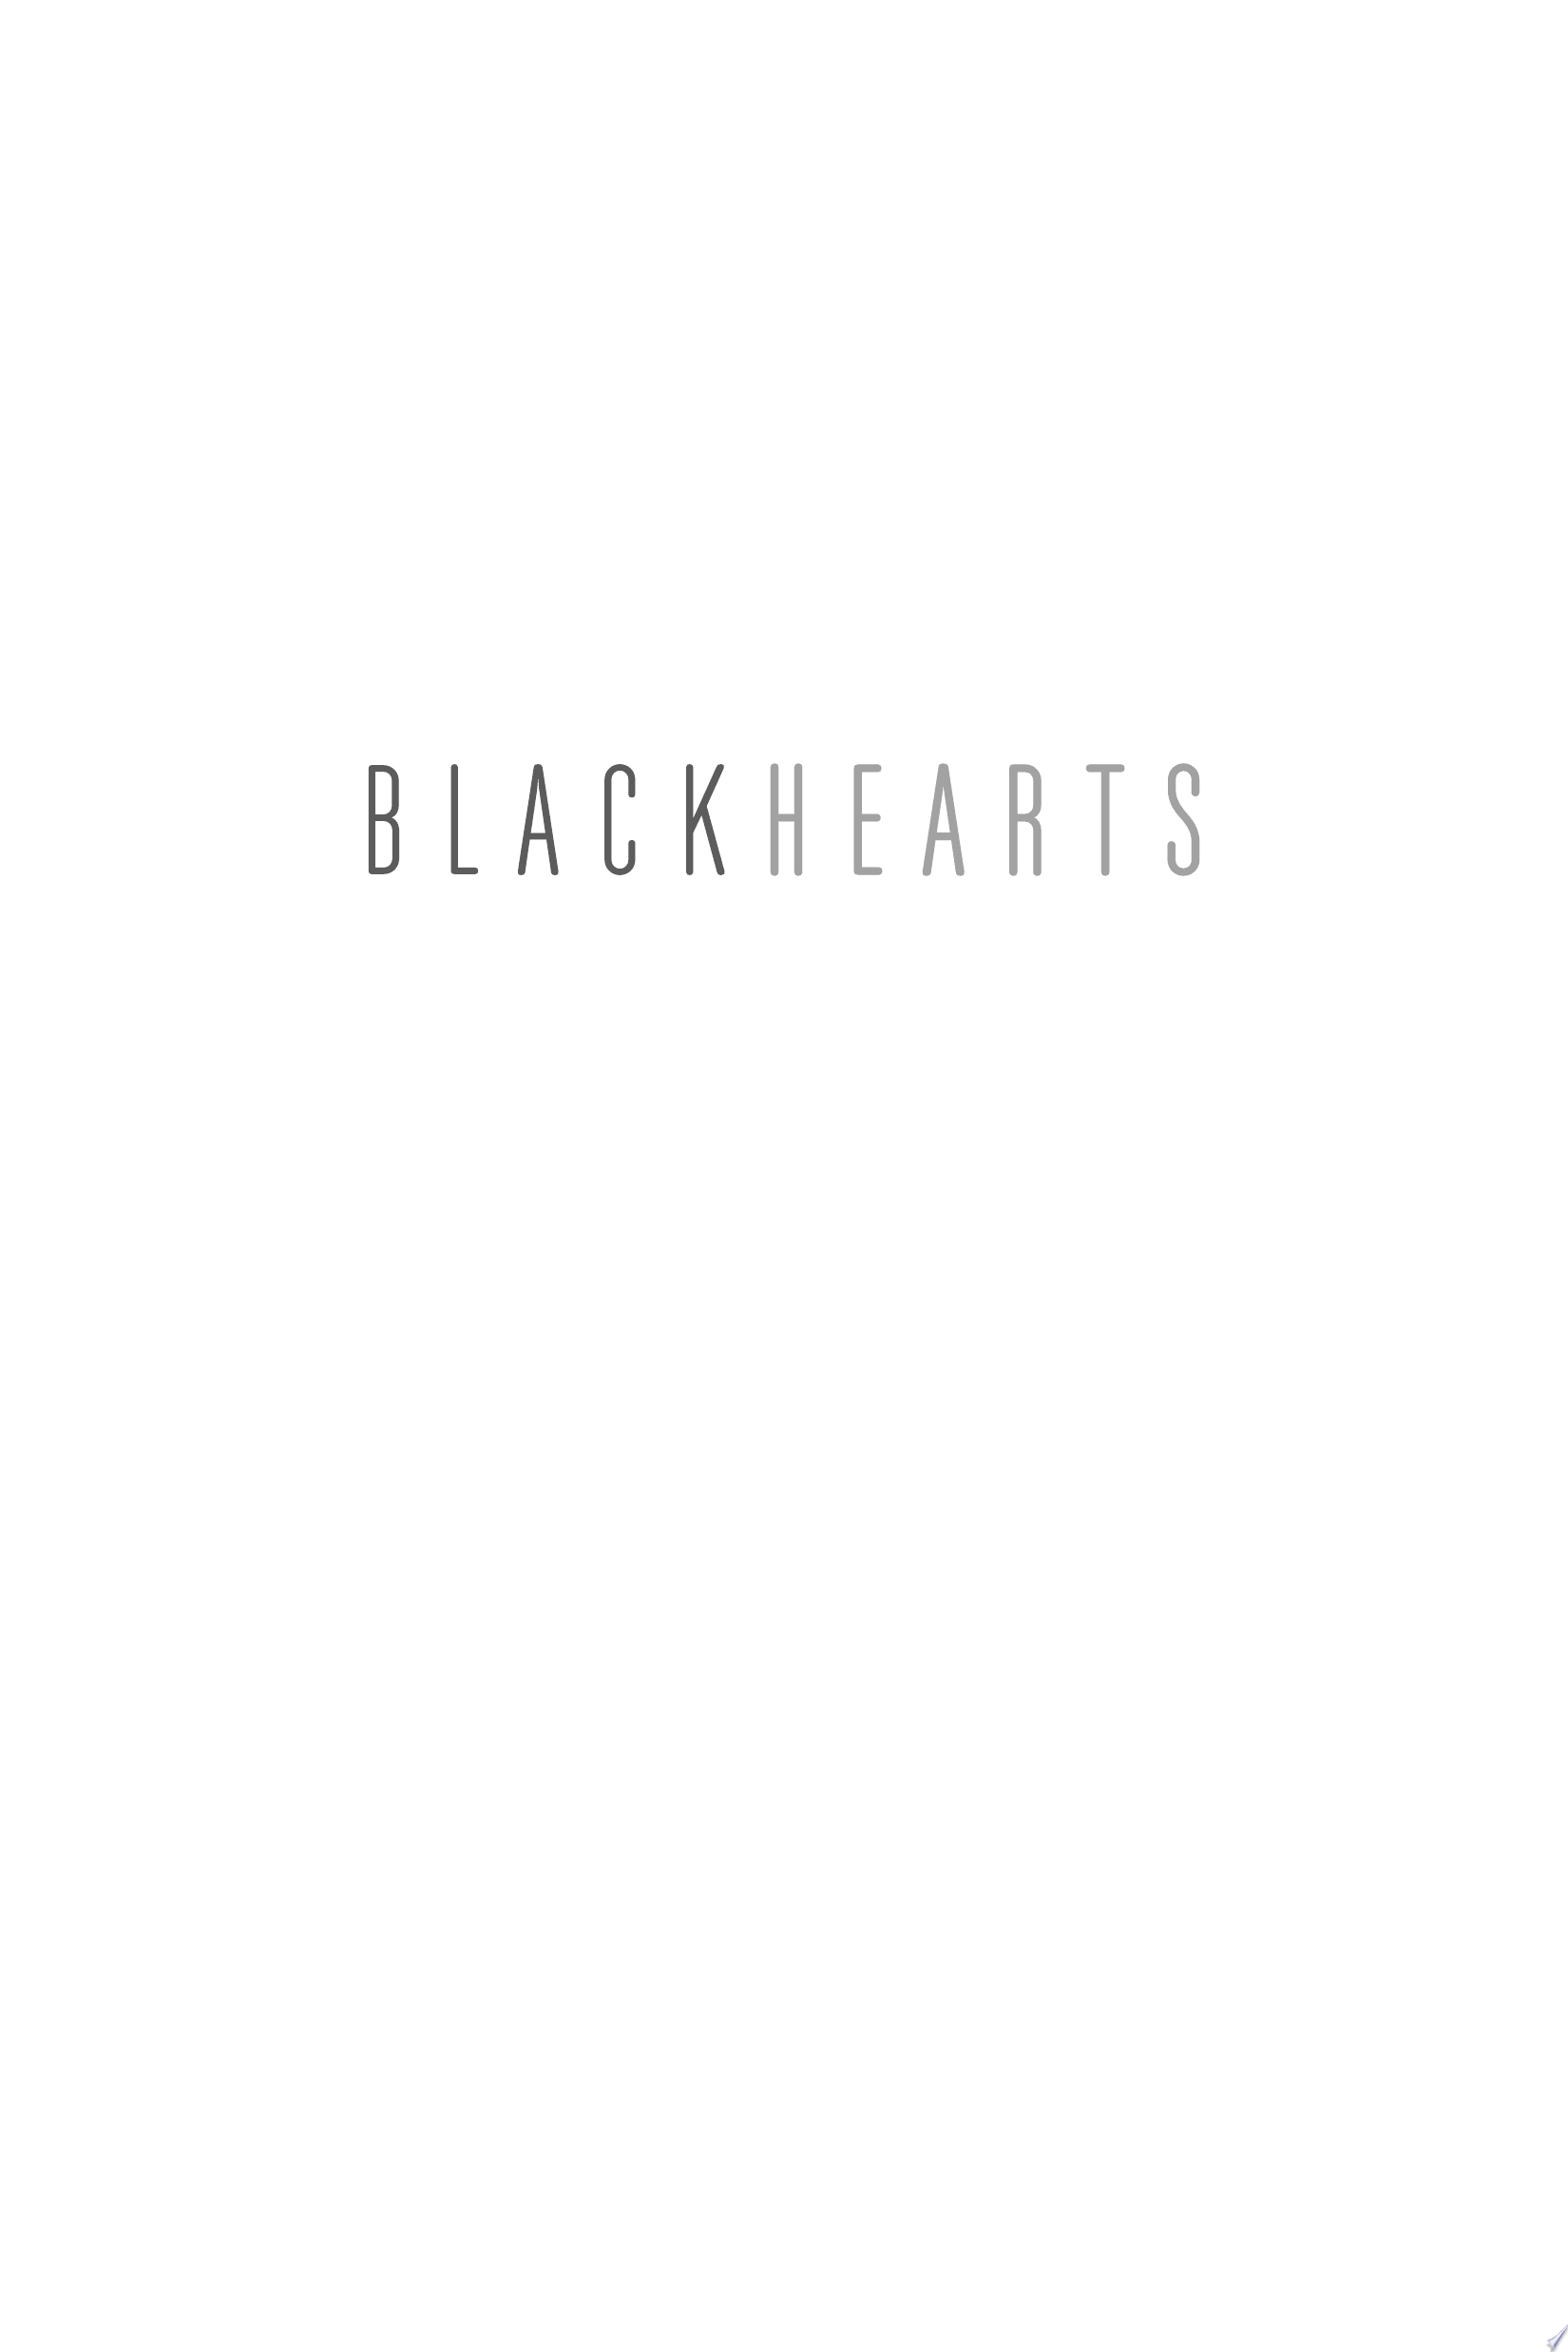 Image for "Blackhearts"